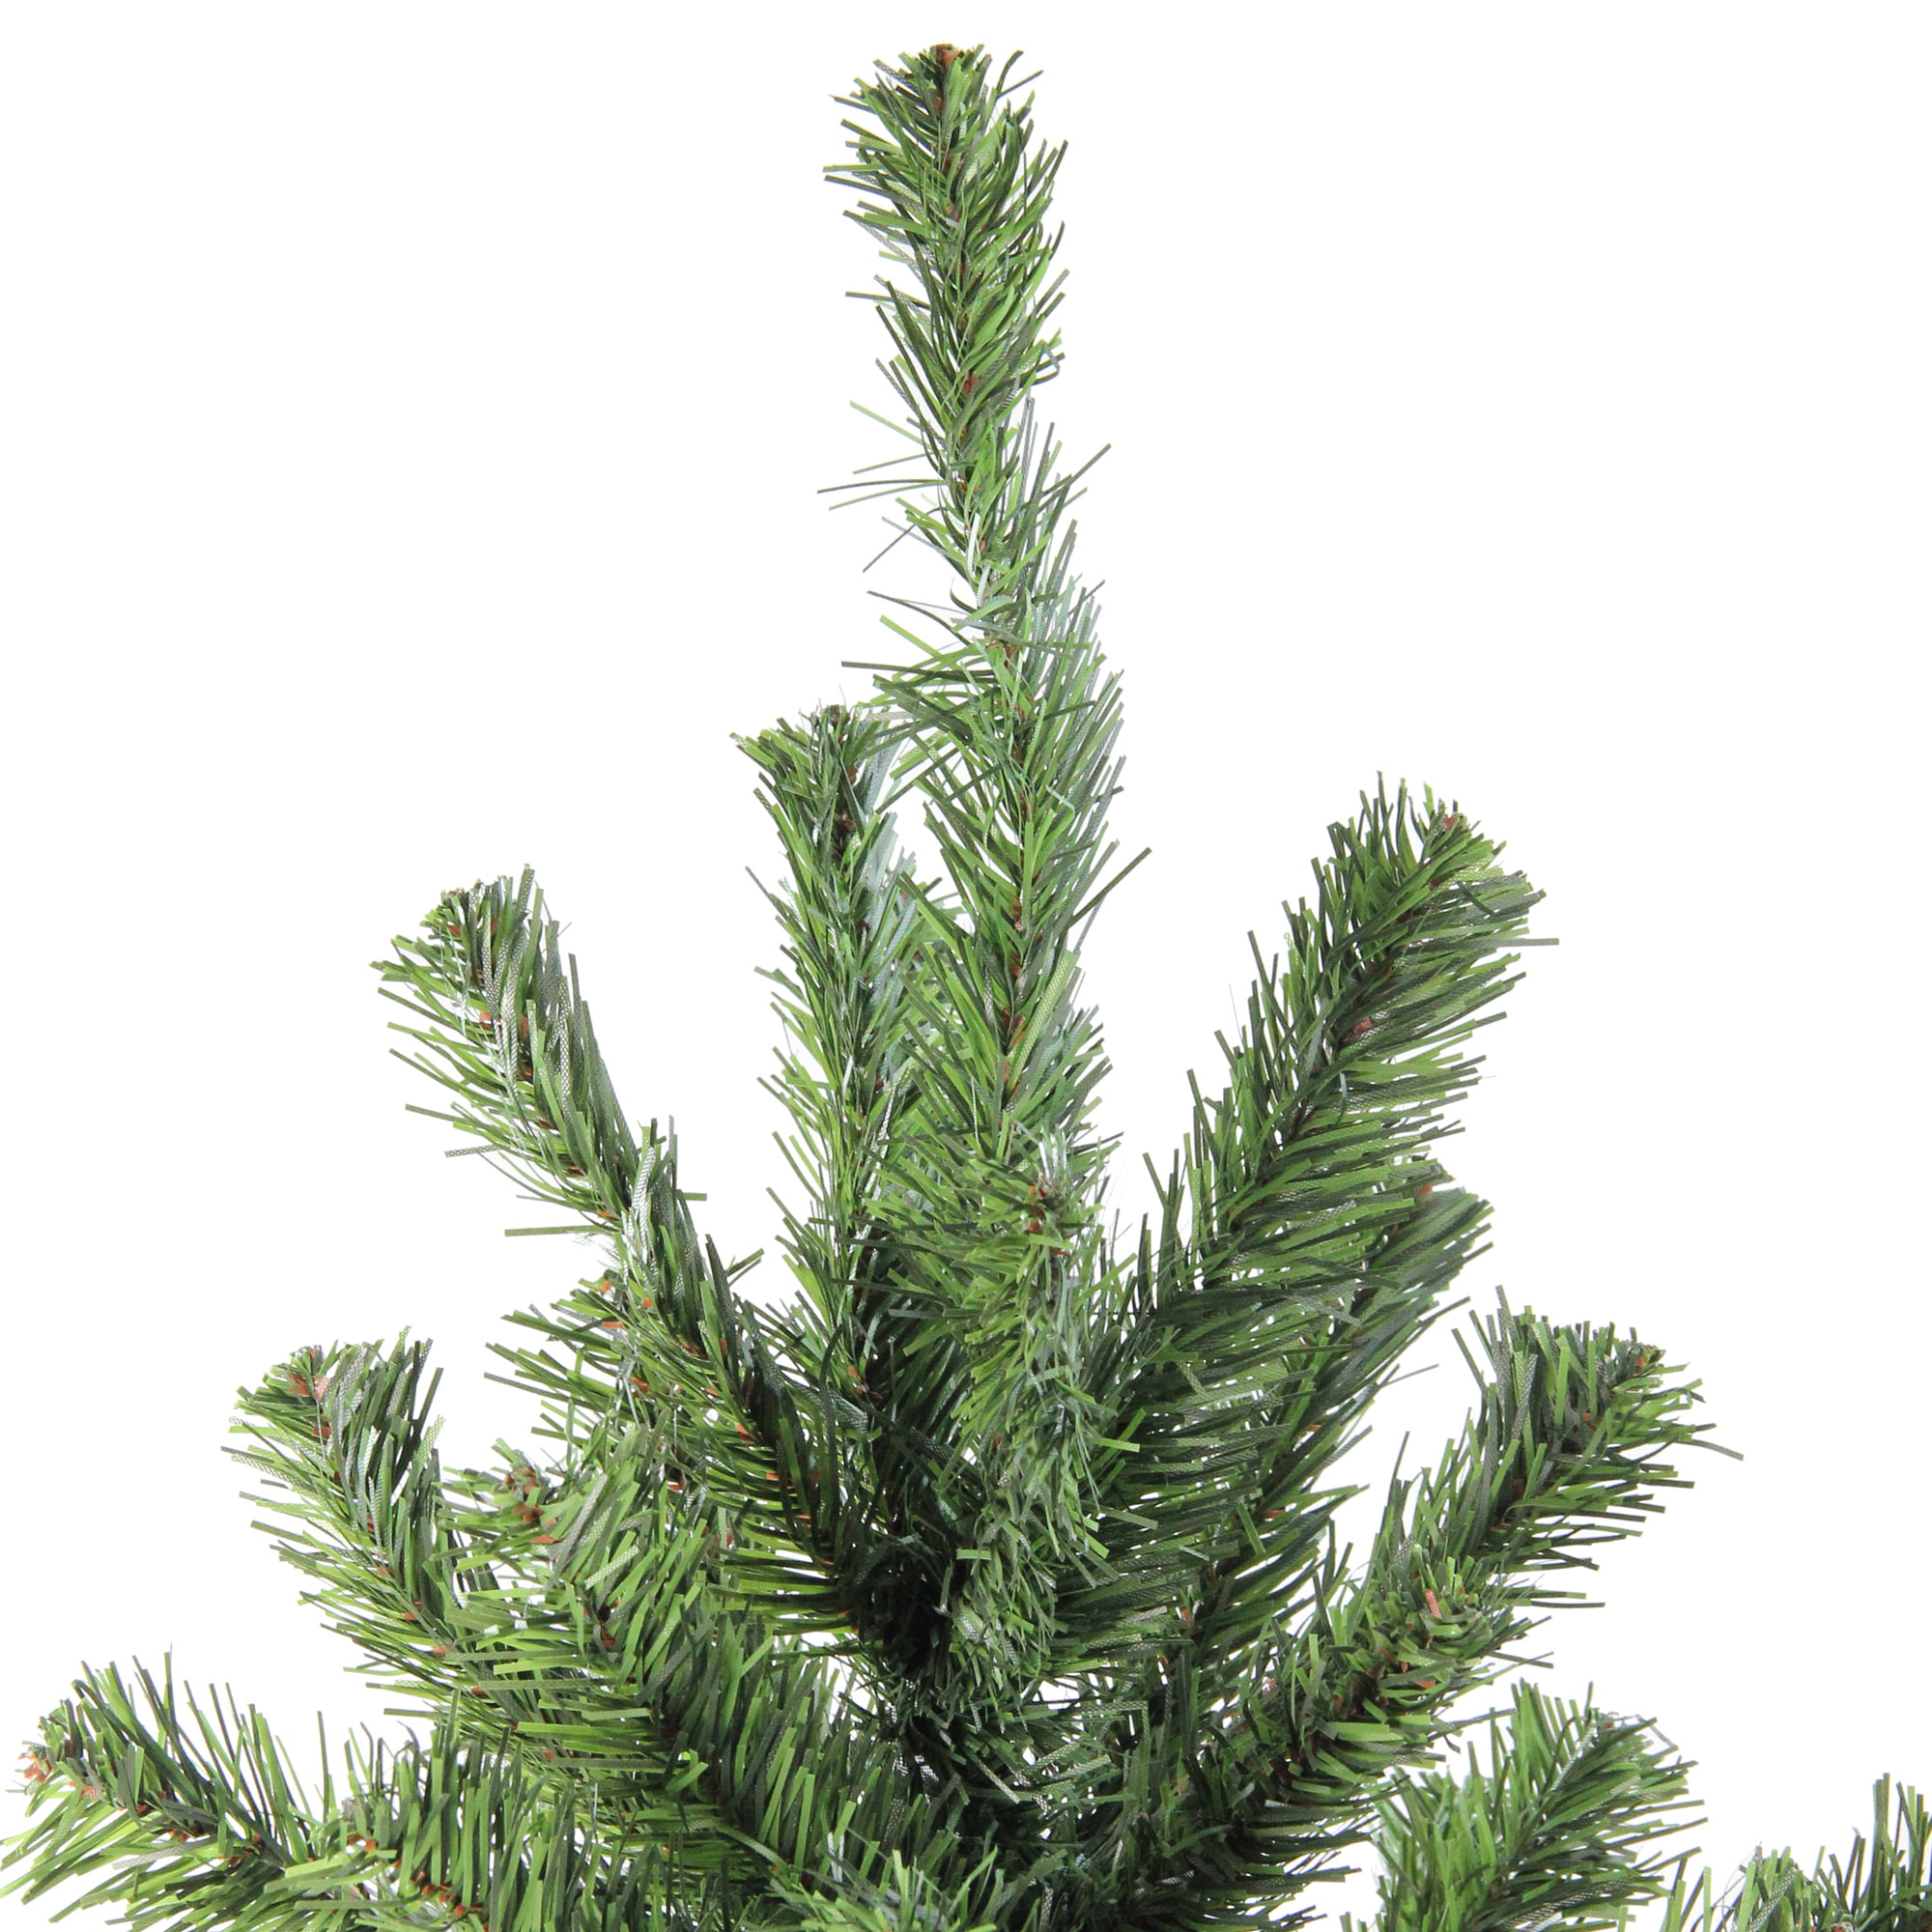 6' Canadian Pine Medium Artificial Christmas Tree - Unlit | Walmart Canada